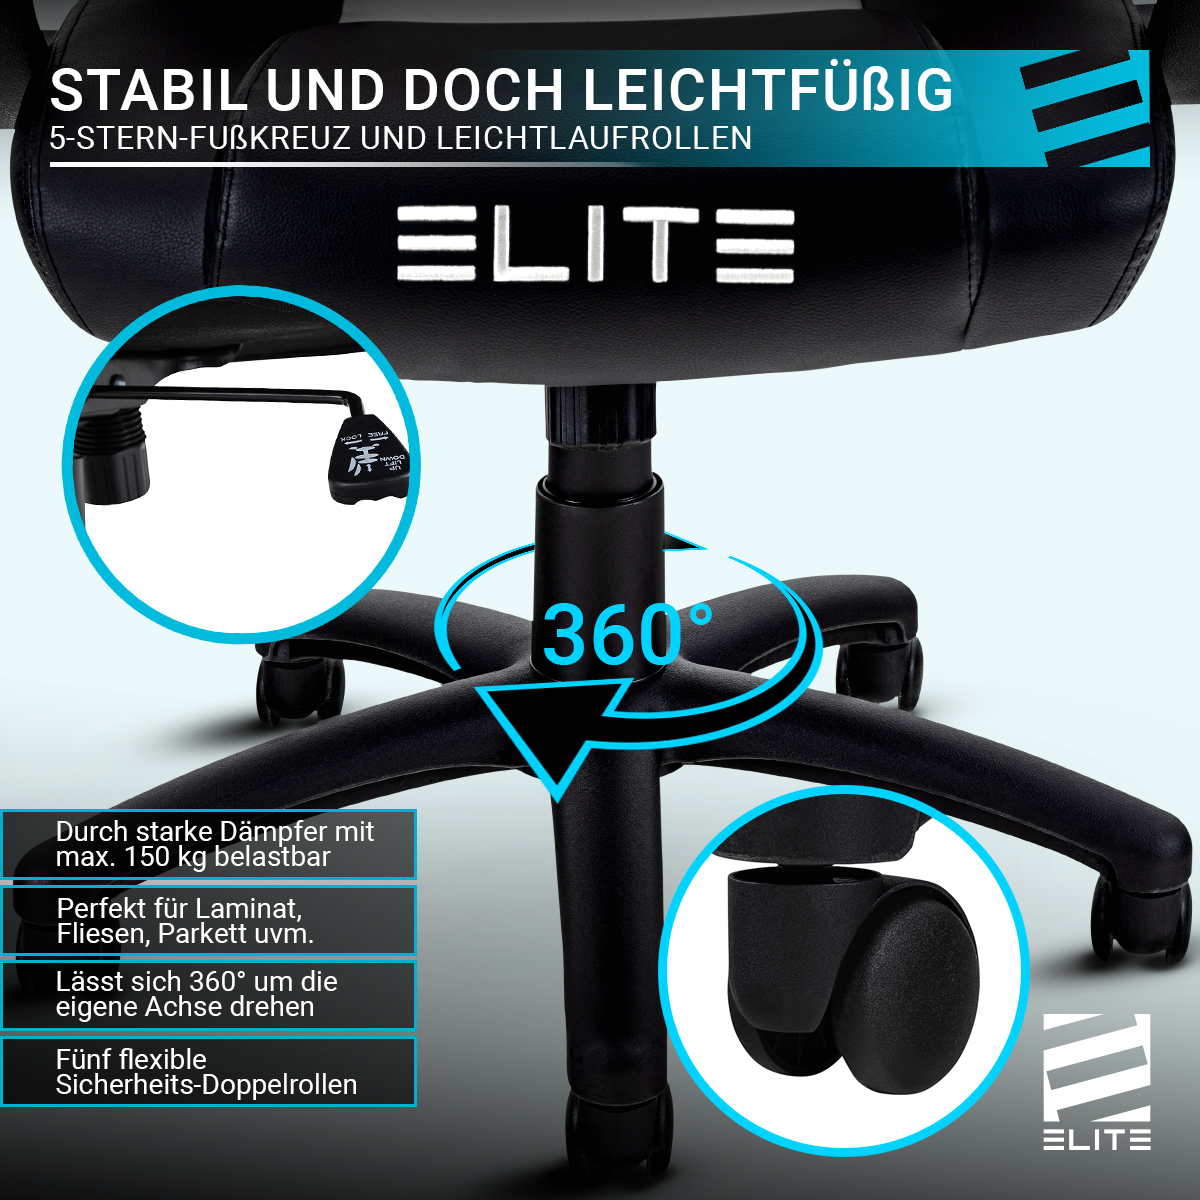 ELITE EXODUS, Memory-Schaum, Rückenlehne, Schwarz/Grün Gaming MG100 Armpolster, Stuhl, hohe Wippmechanik, extra